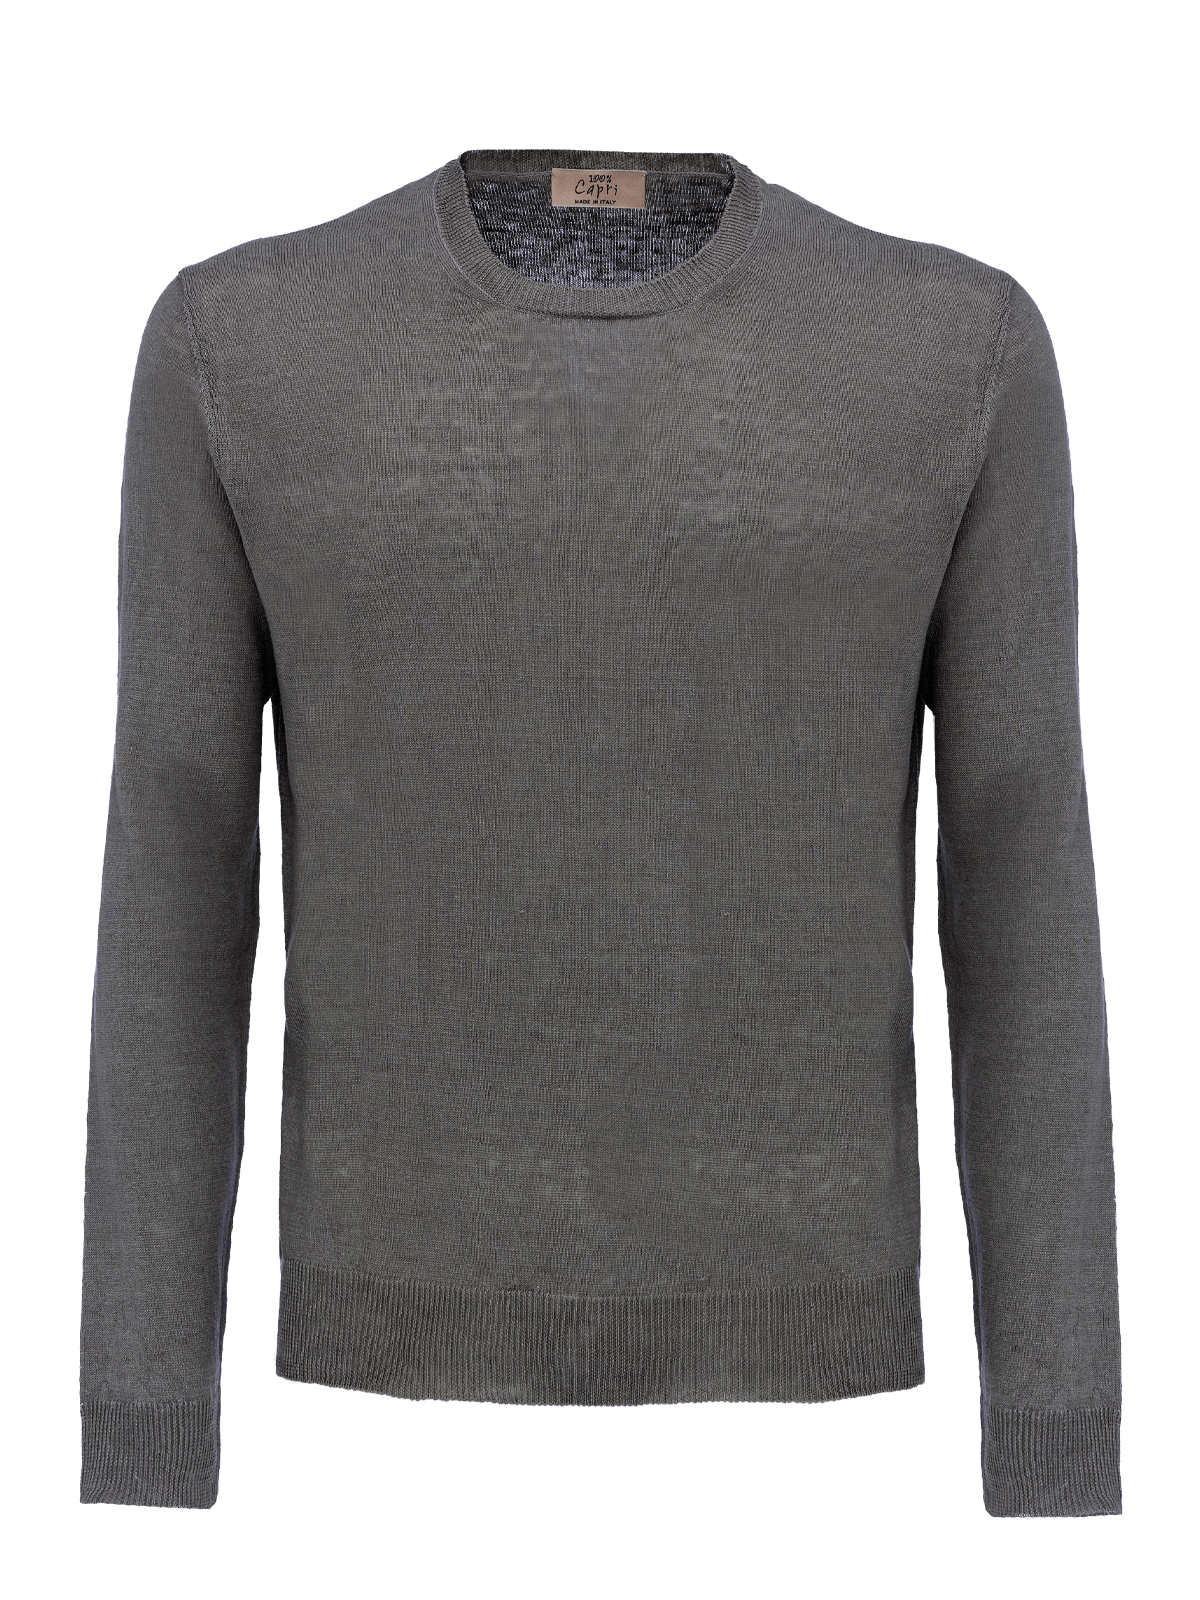 T-Shirt M/L for man 100% Capri linen dark grey t-shirt front